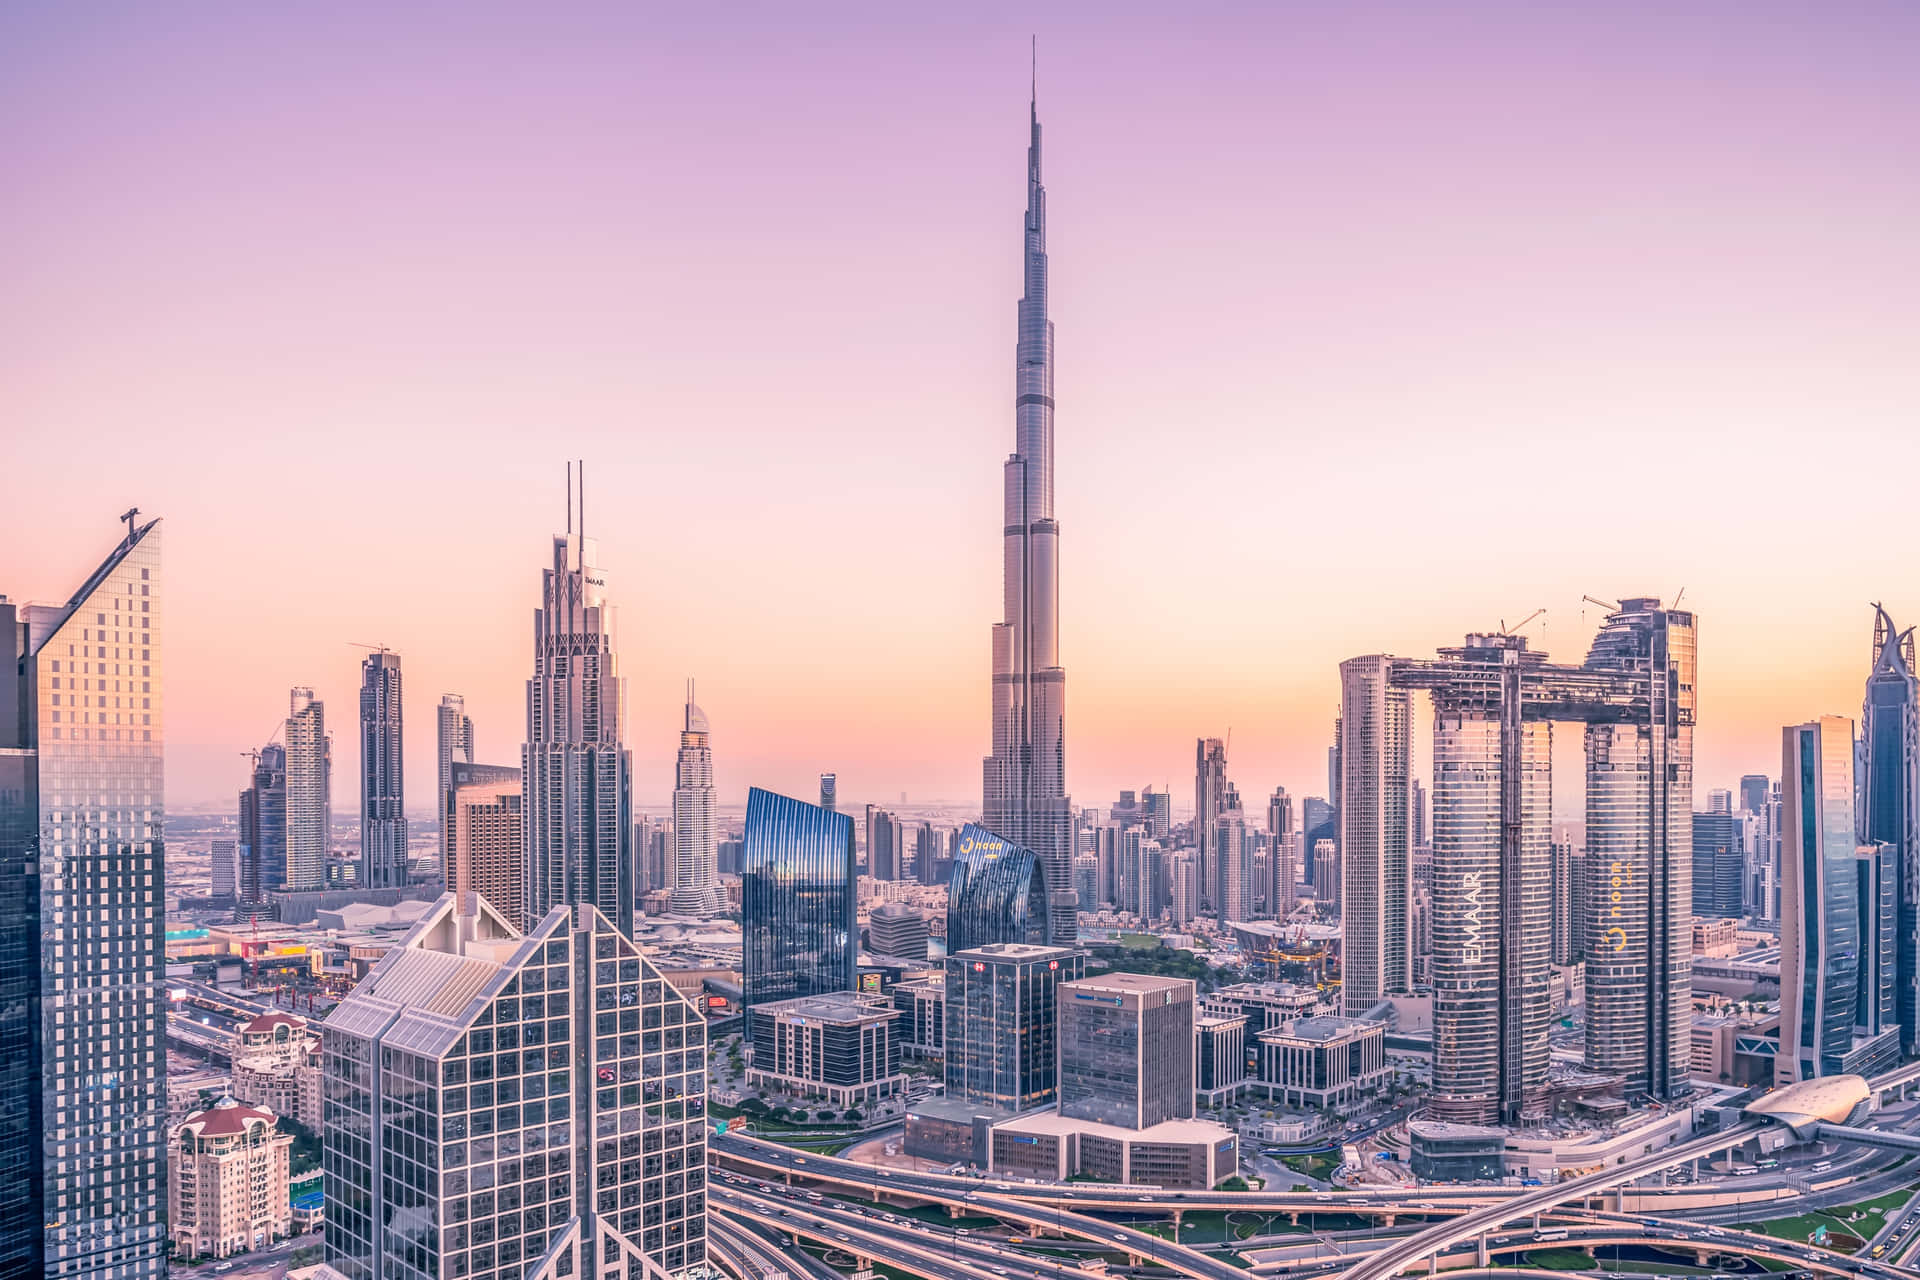 Caption: Majestic Evening View Of The Dubai Cityscape